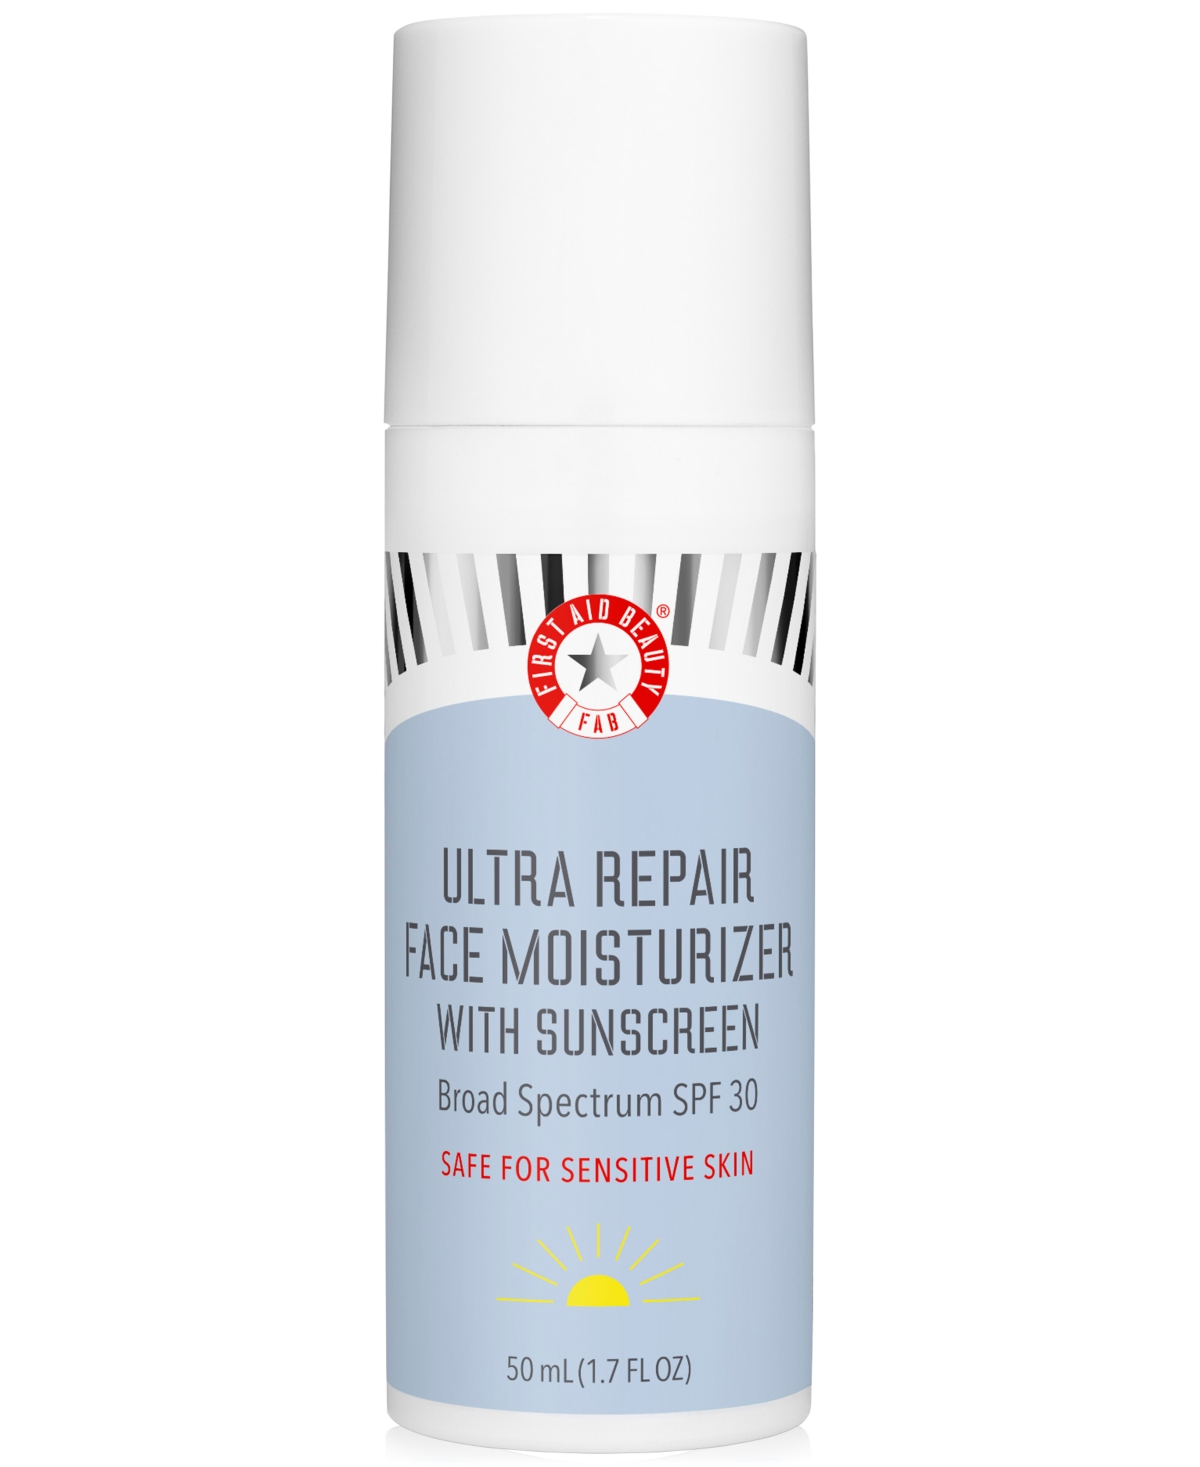 Ultra Repair Face Moisturizer With Sunscreen Spf 30, 1.7 oz.